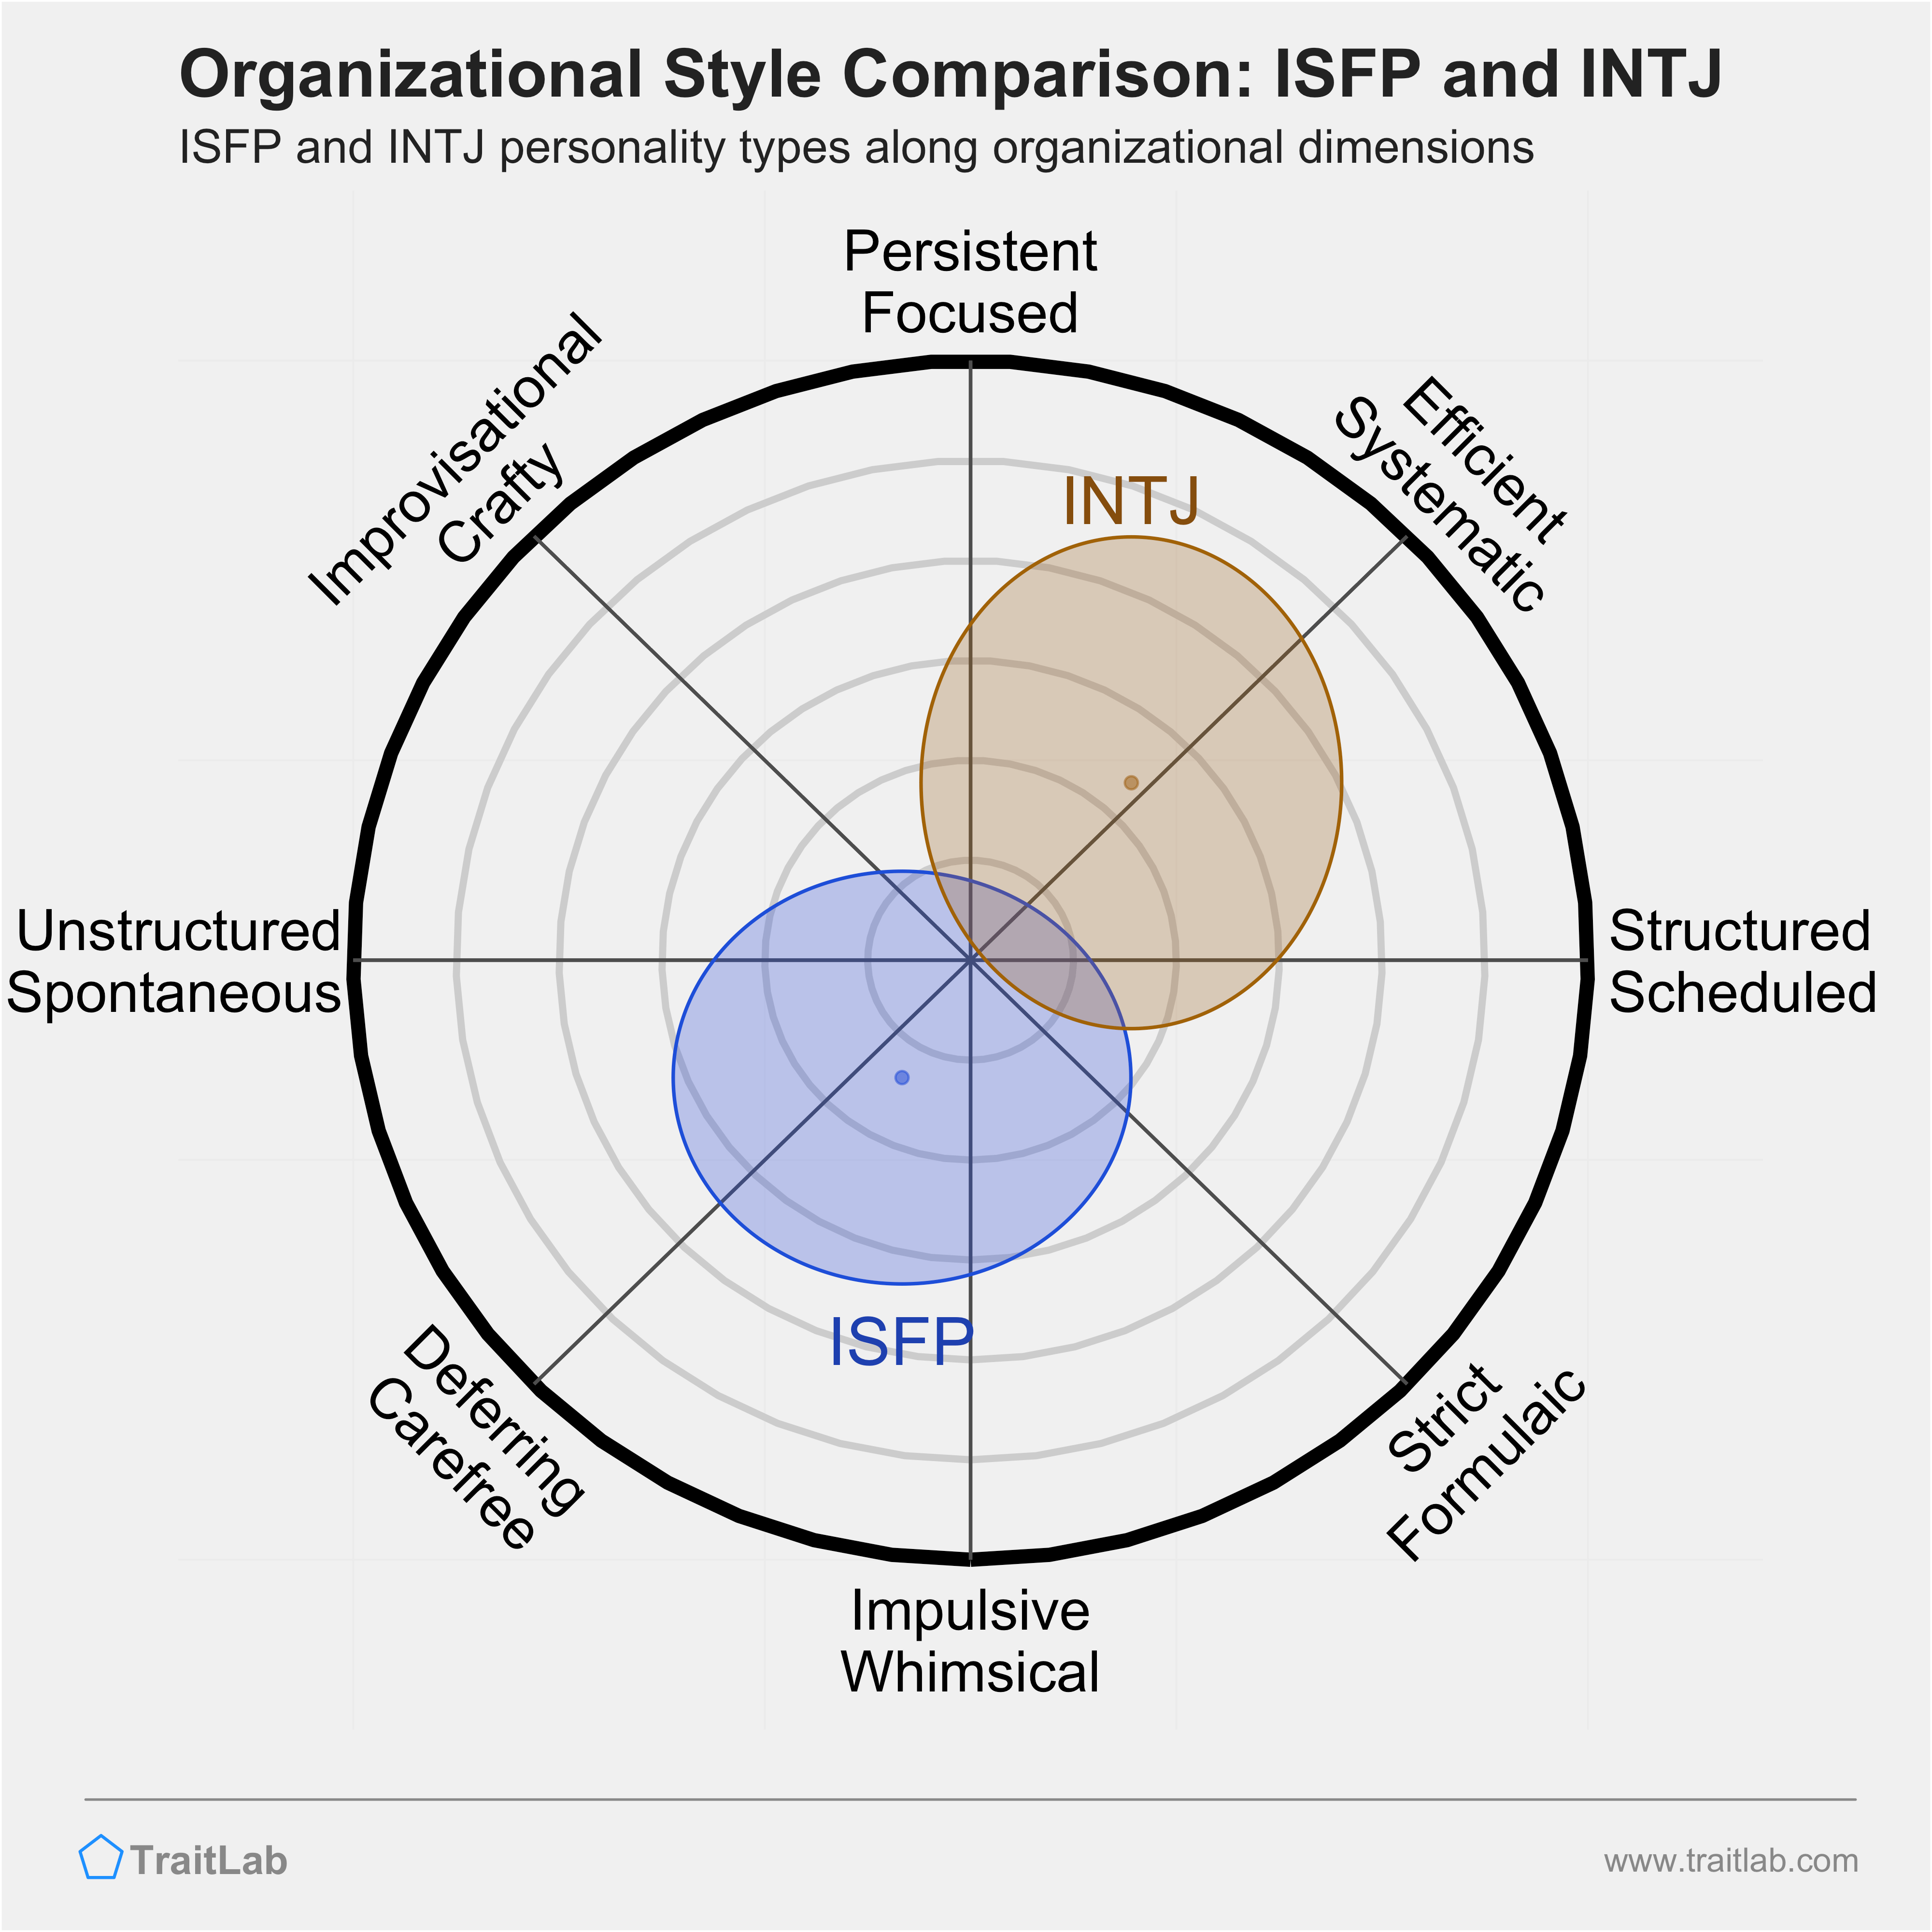 ISFP and INTJ comparison across organizational dimensions